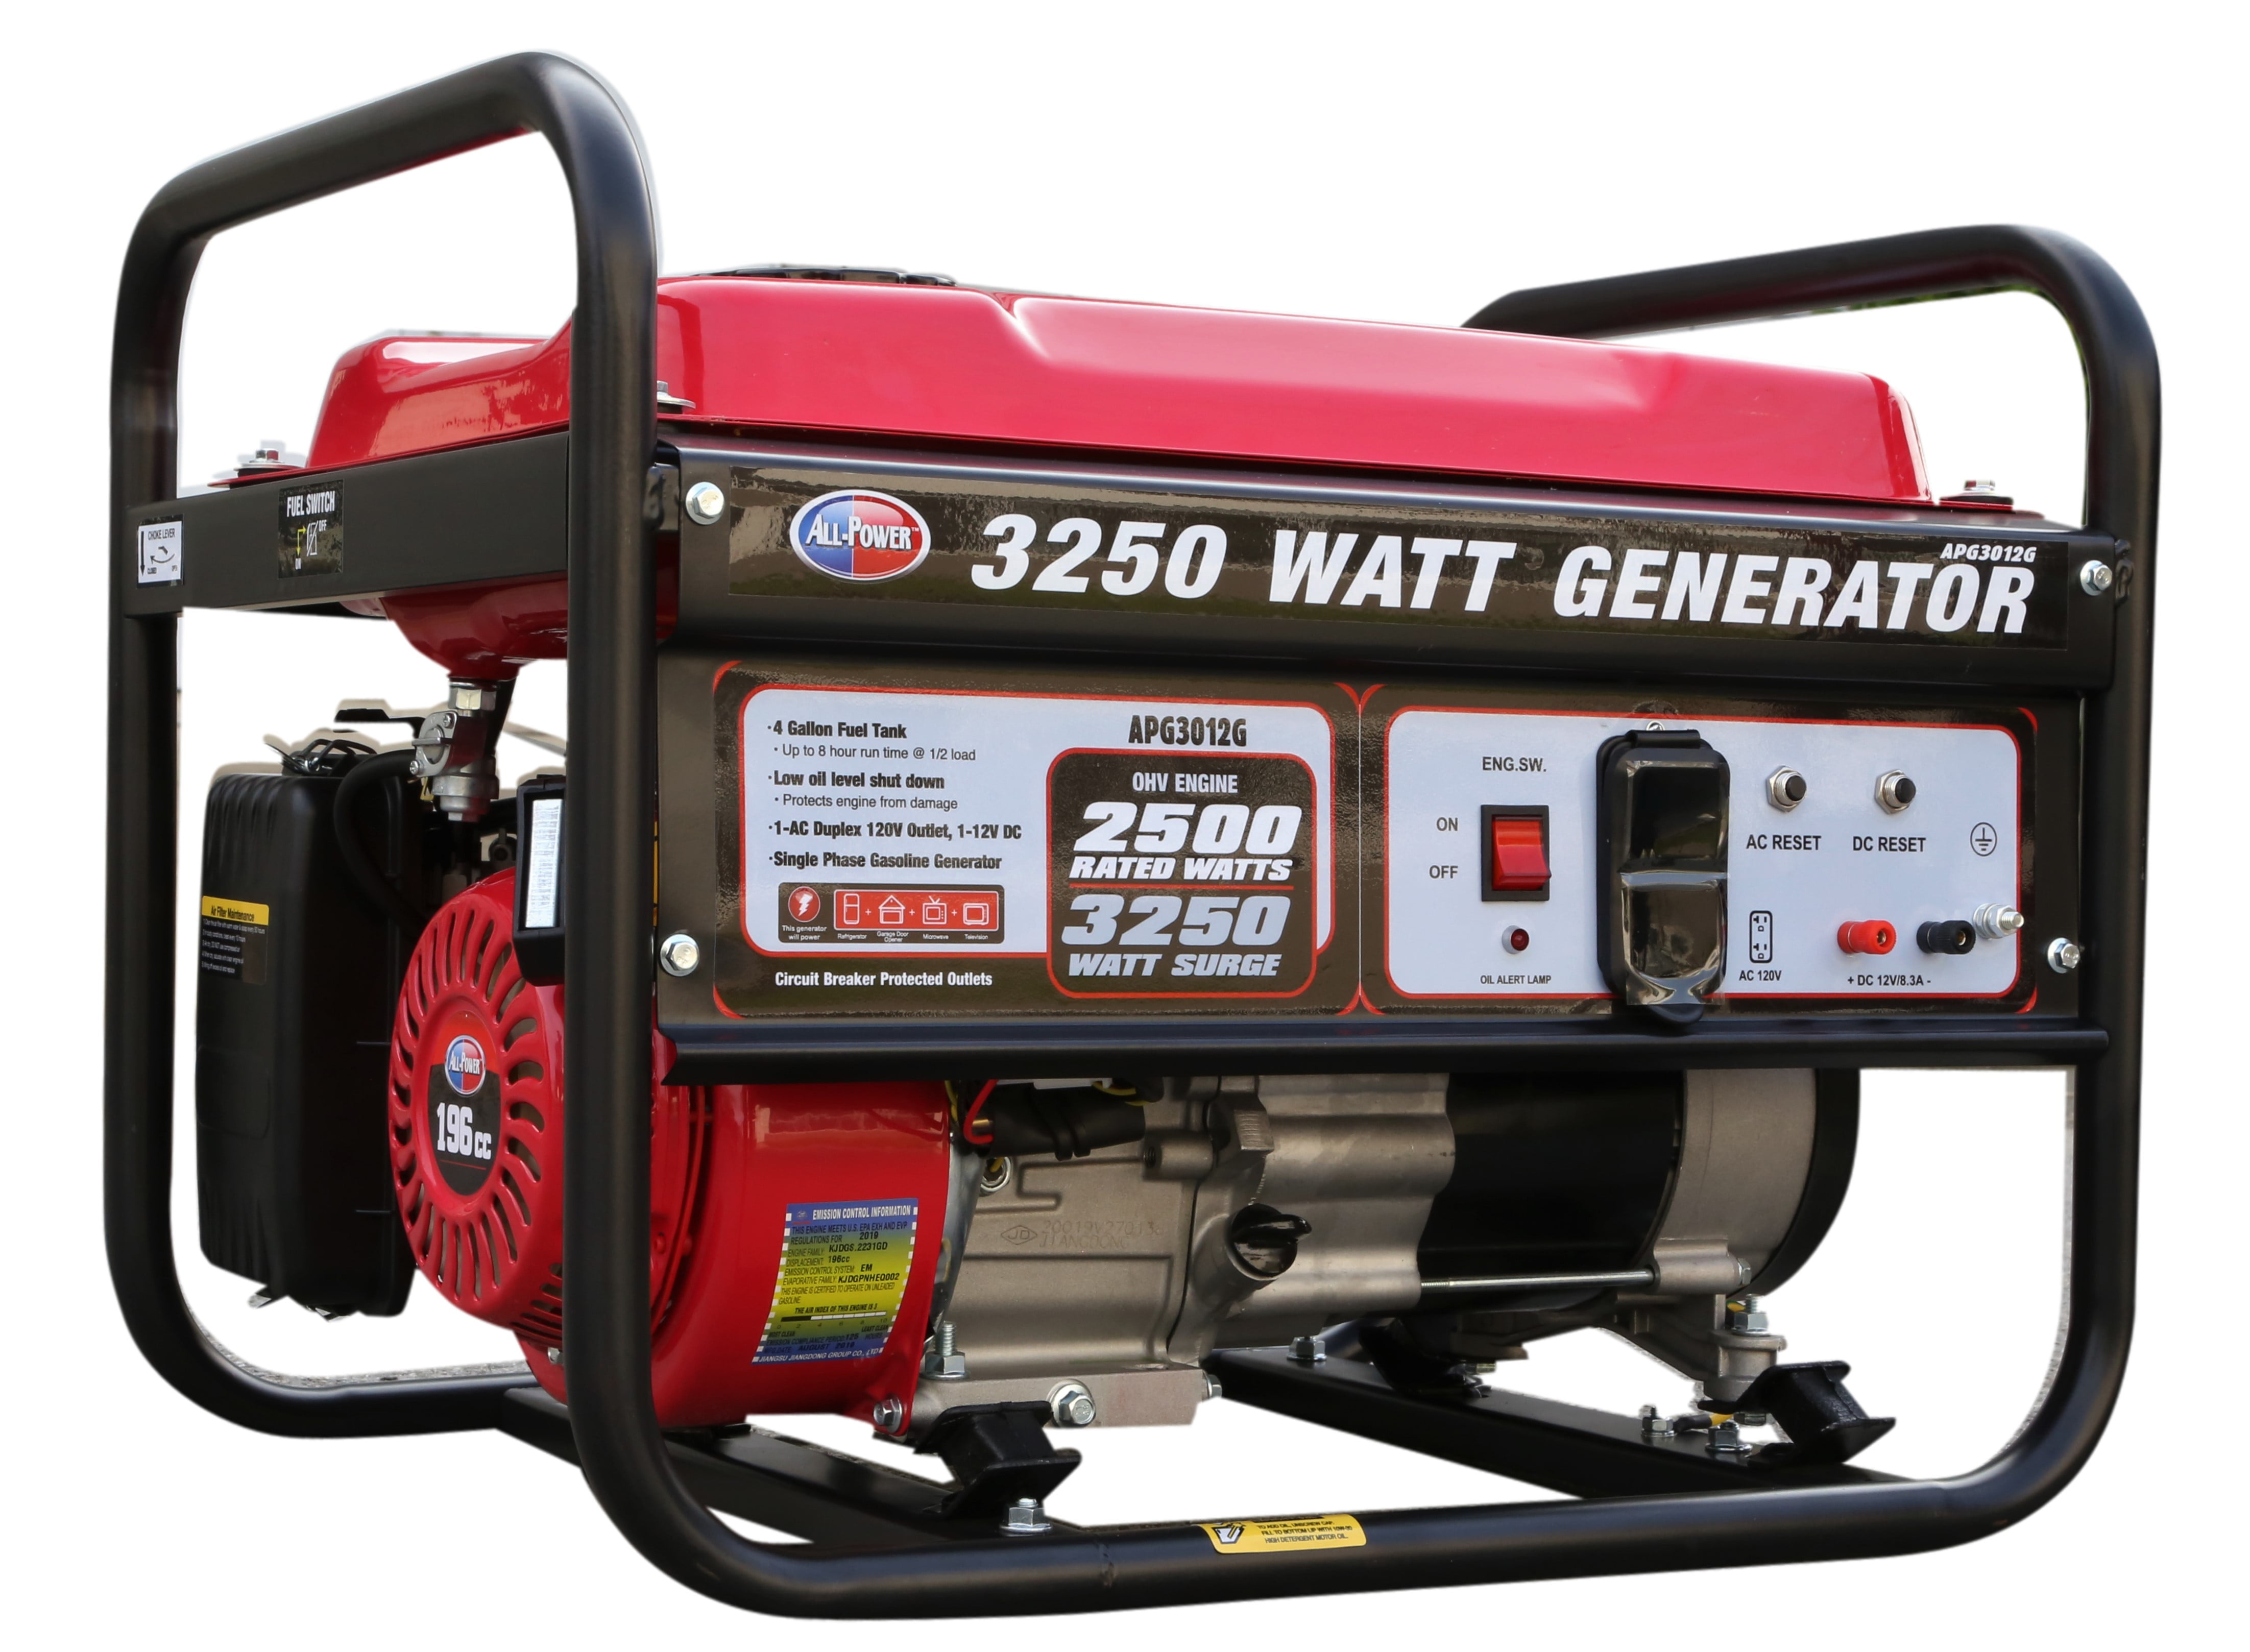 All Power 3250 Watt Portable Generator APG3012G, 3250W Gas Powered Generator  for Home Power Backup, Hurricane Damage Restoration, EPA Certified -  Walmart.com